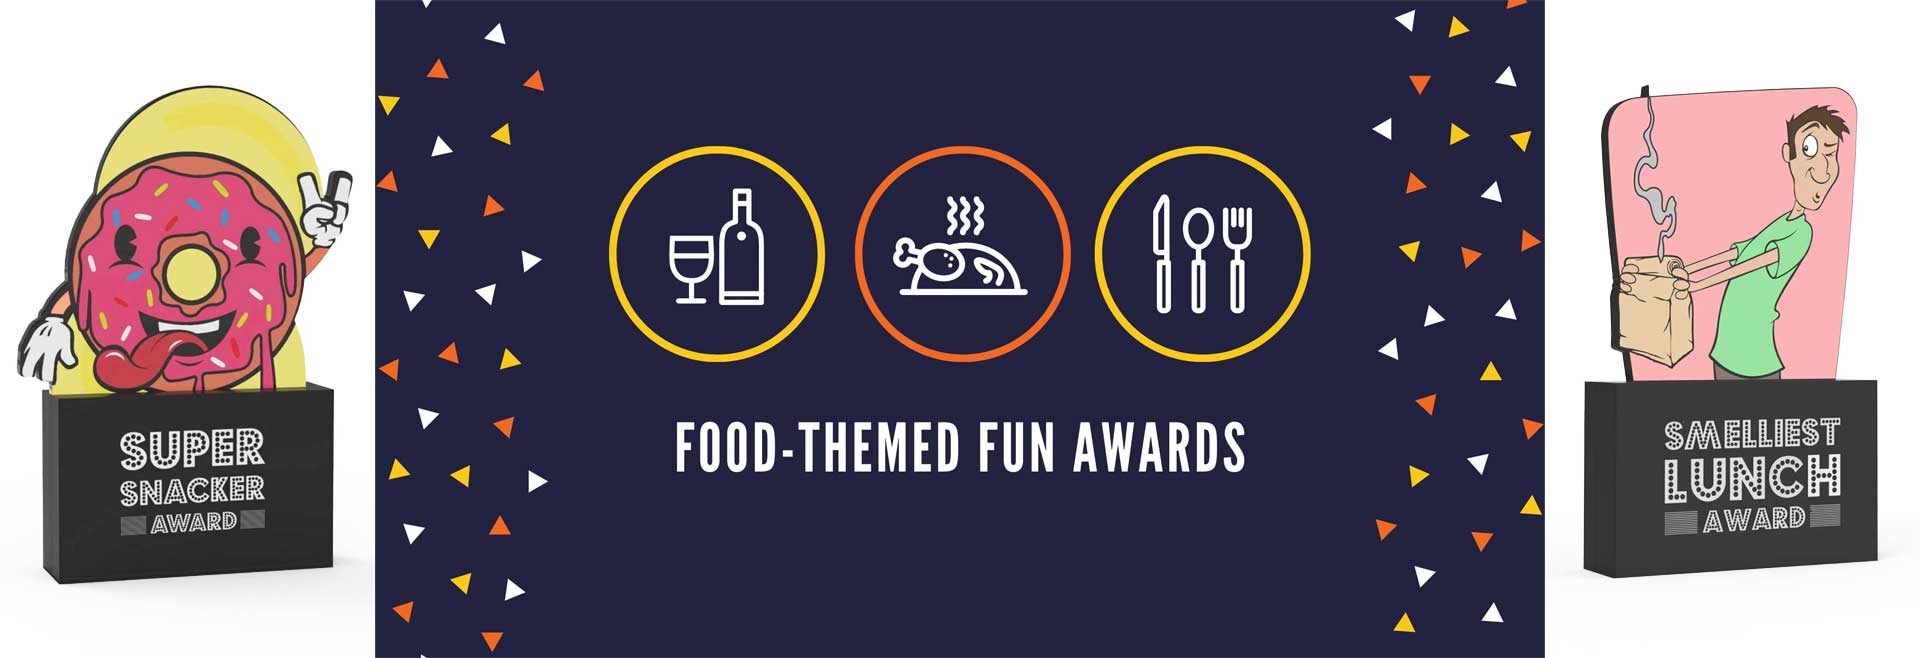 Food-themed Fun Awards